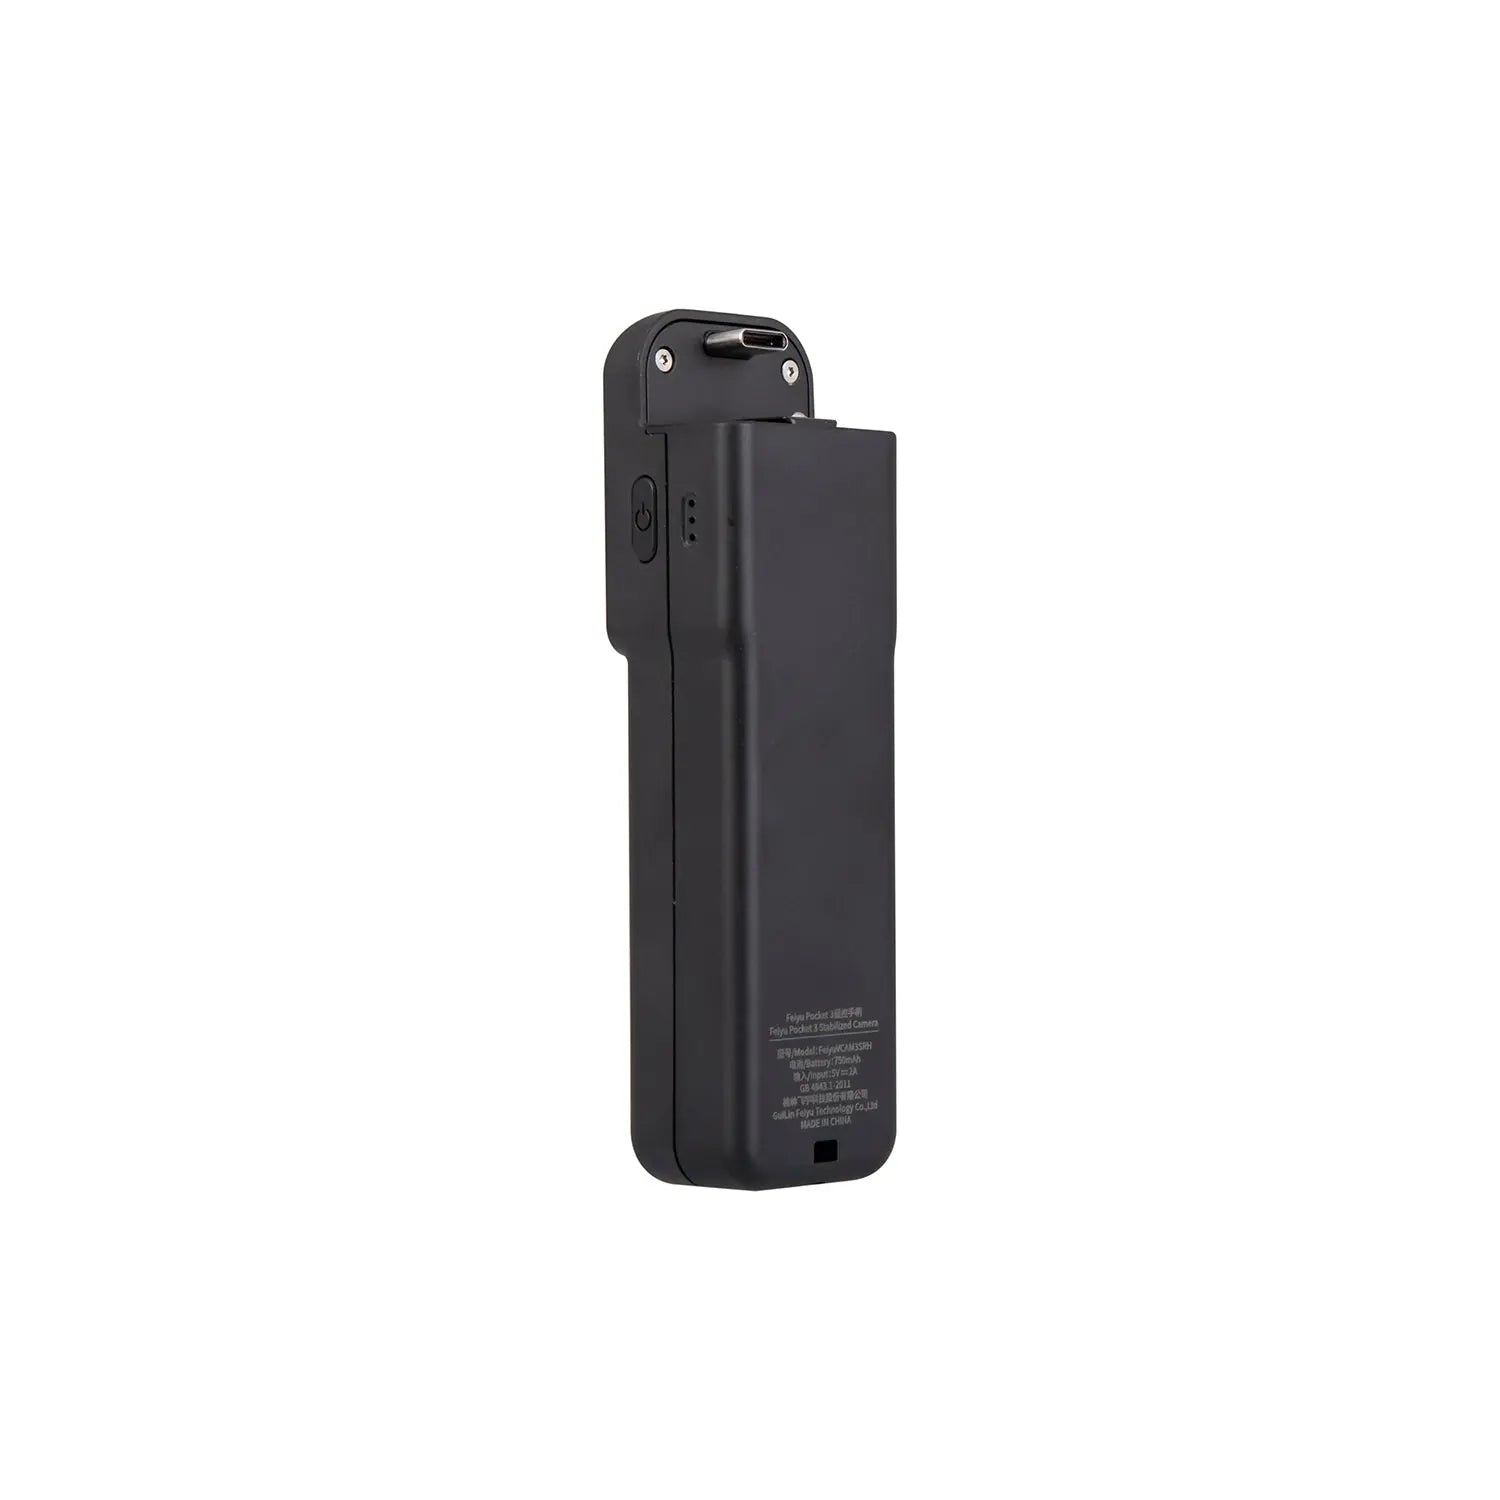 Feiyu Pocket 3 cordless detachable 3-axis gimbal camera9